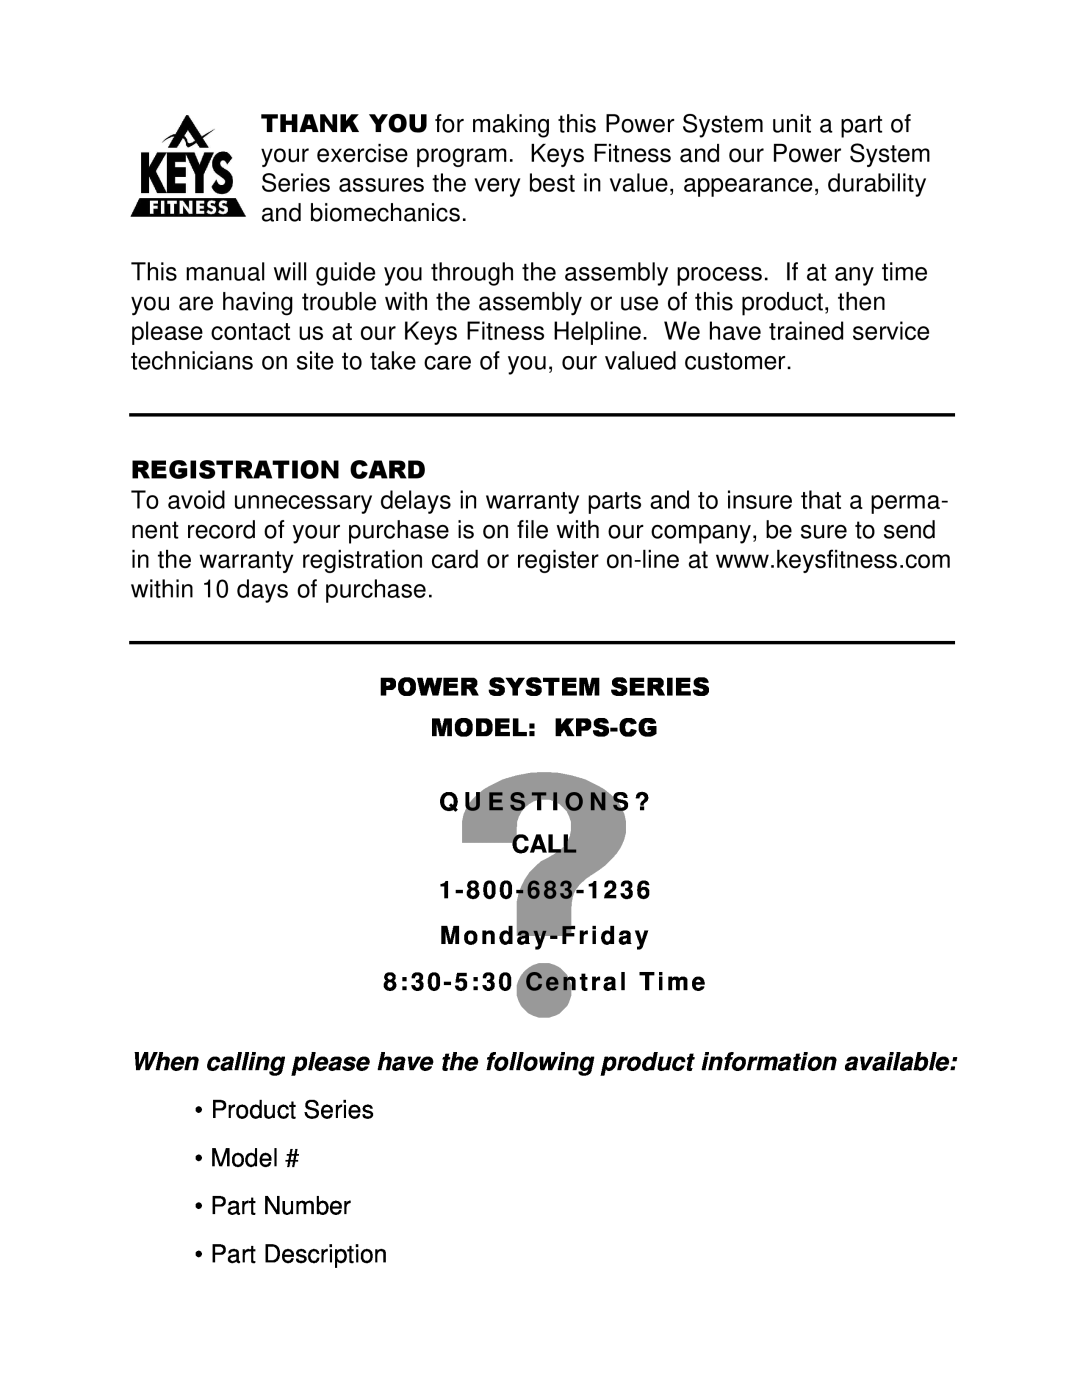 Keys Fitness KPS-CG Registration Card, Power System Series Model Kps-Cg Q U E S T I O N S ? Call, 830 - 530 Central Time 